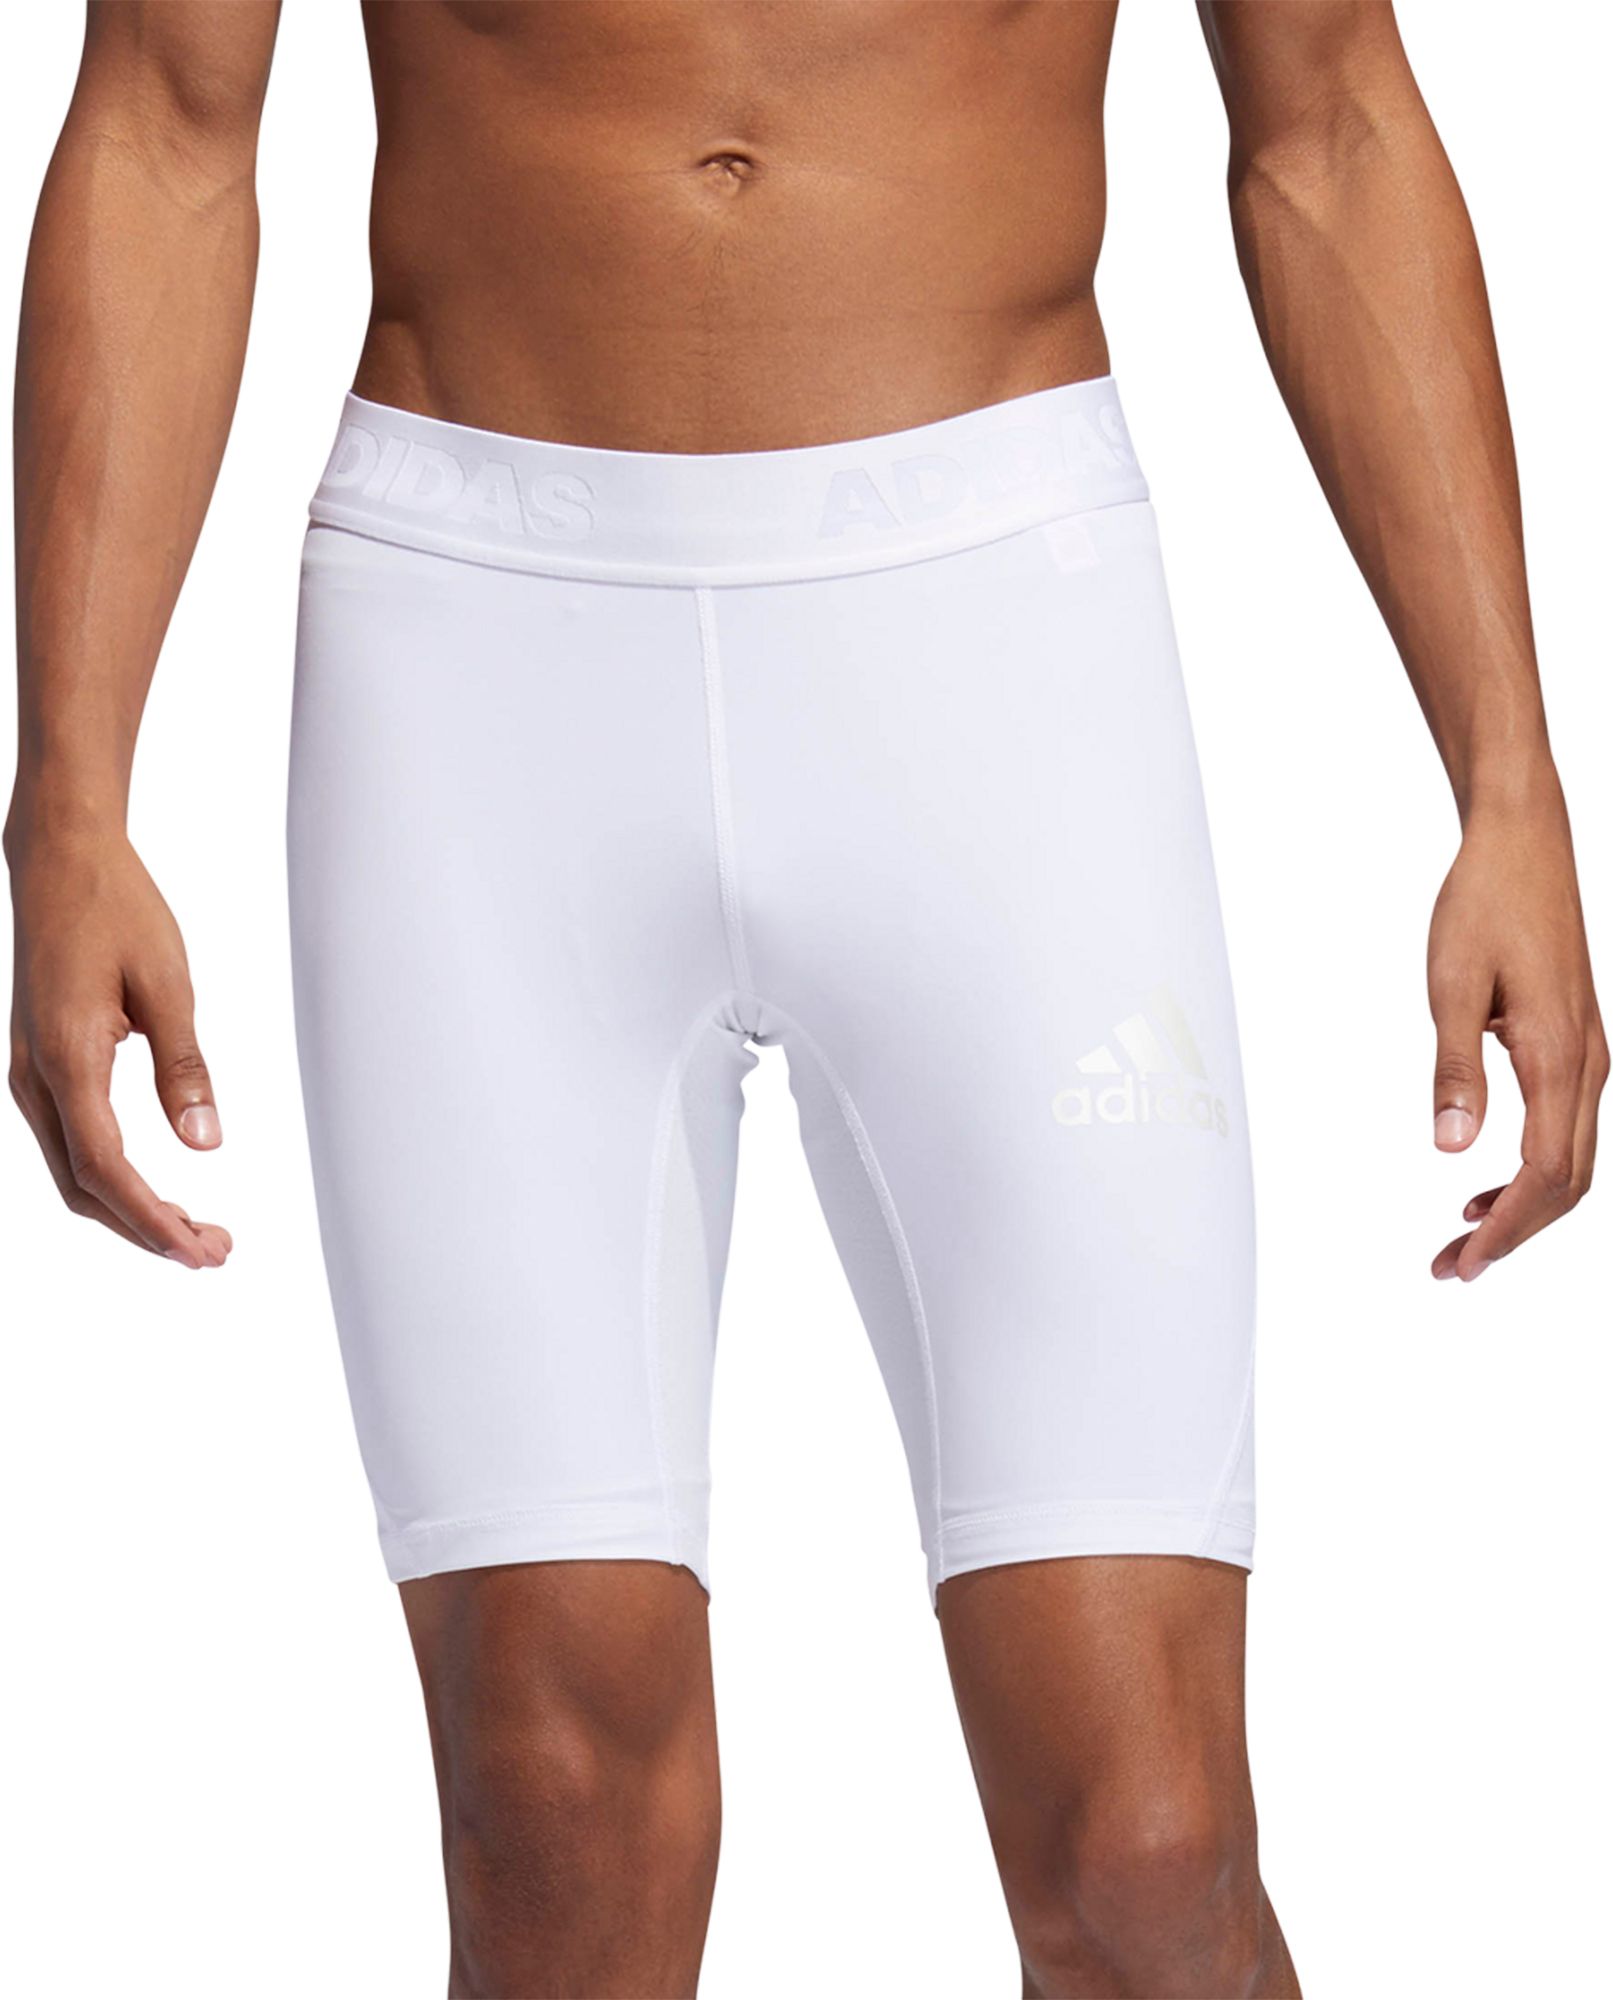 adidas men's compression shorts